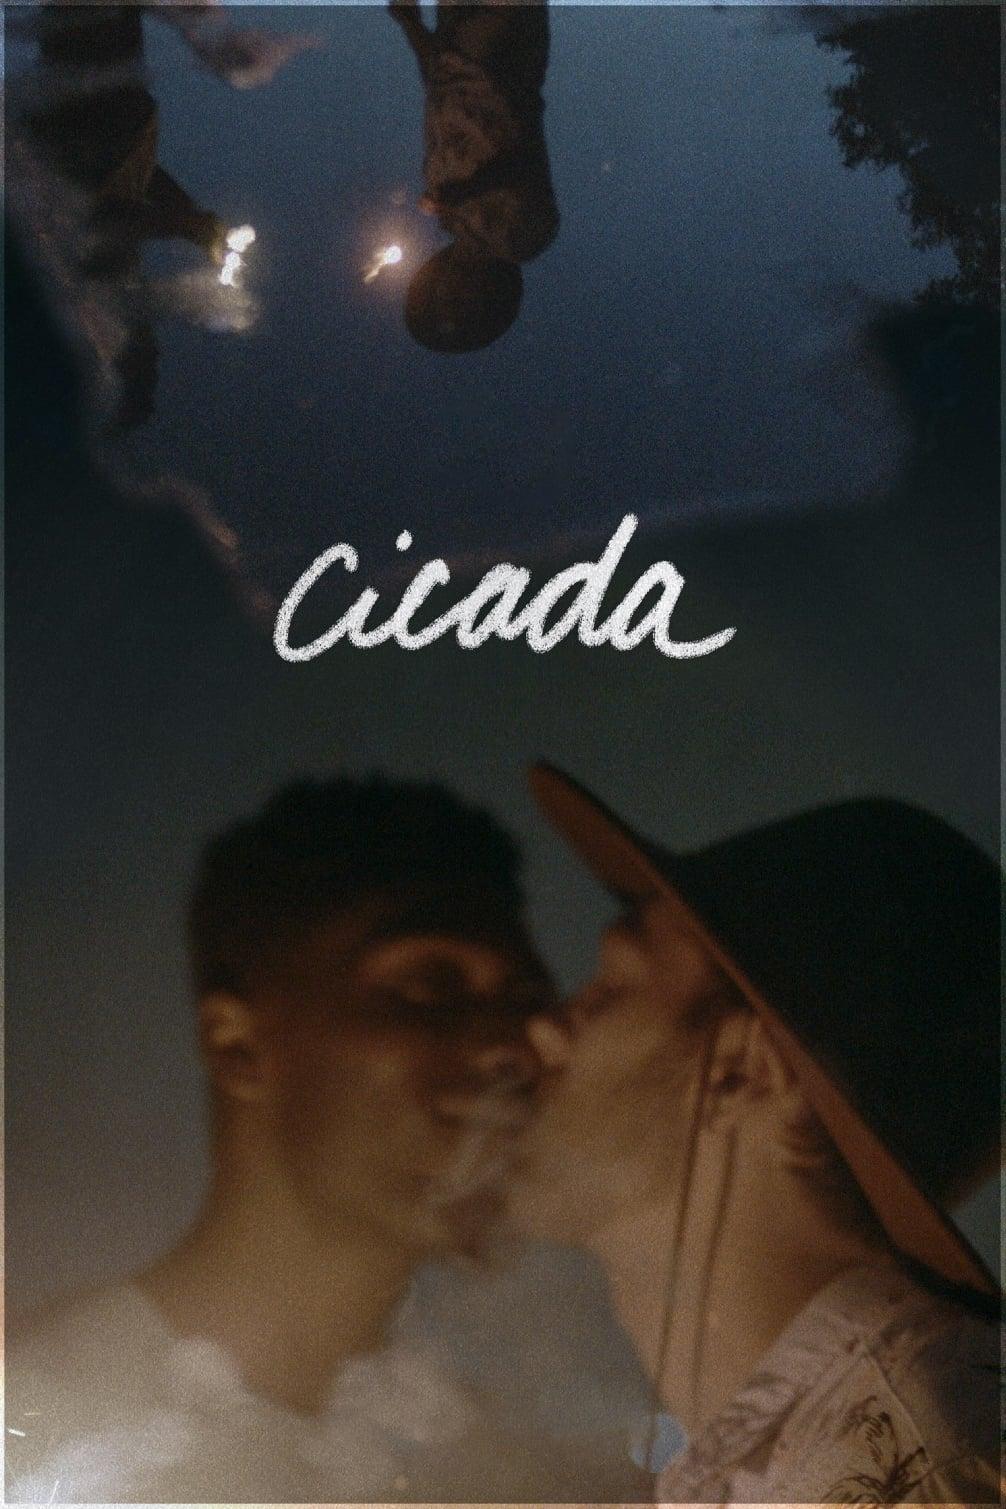 Cicada poster